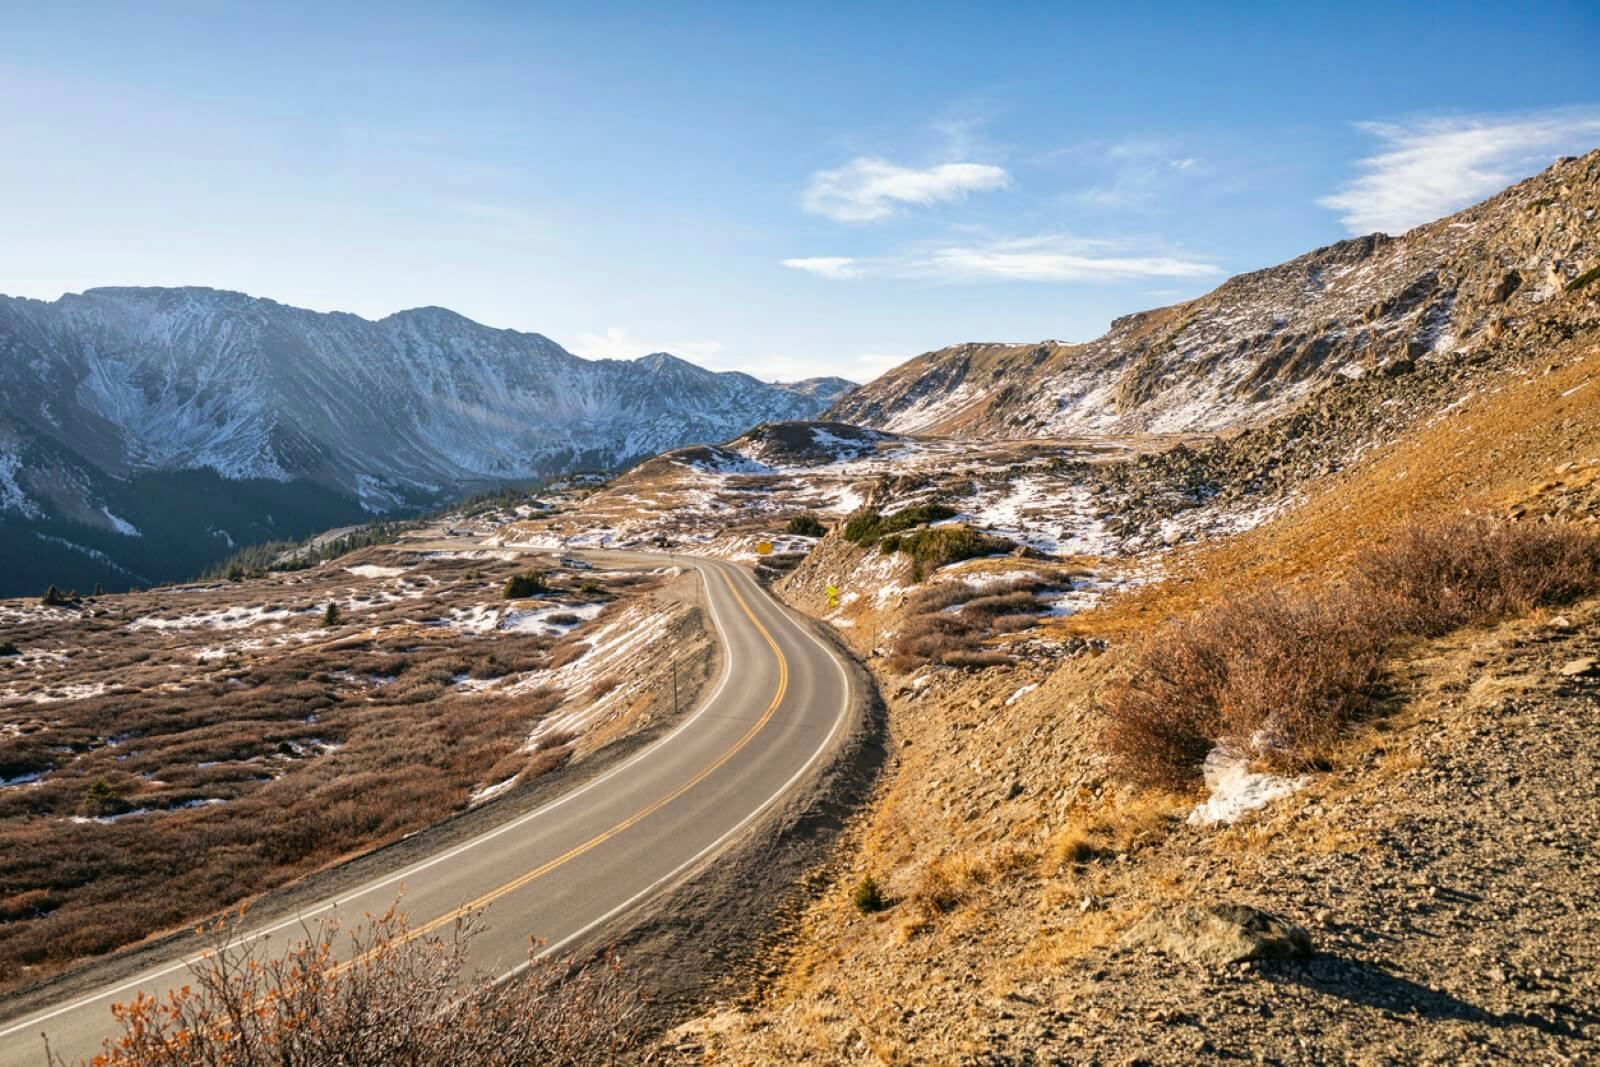 A scenic road through Colorado